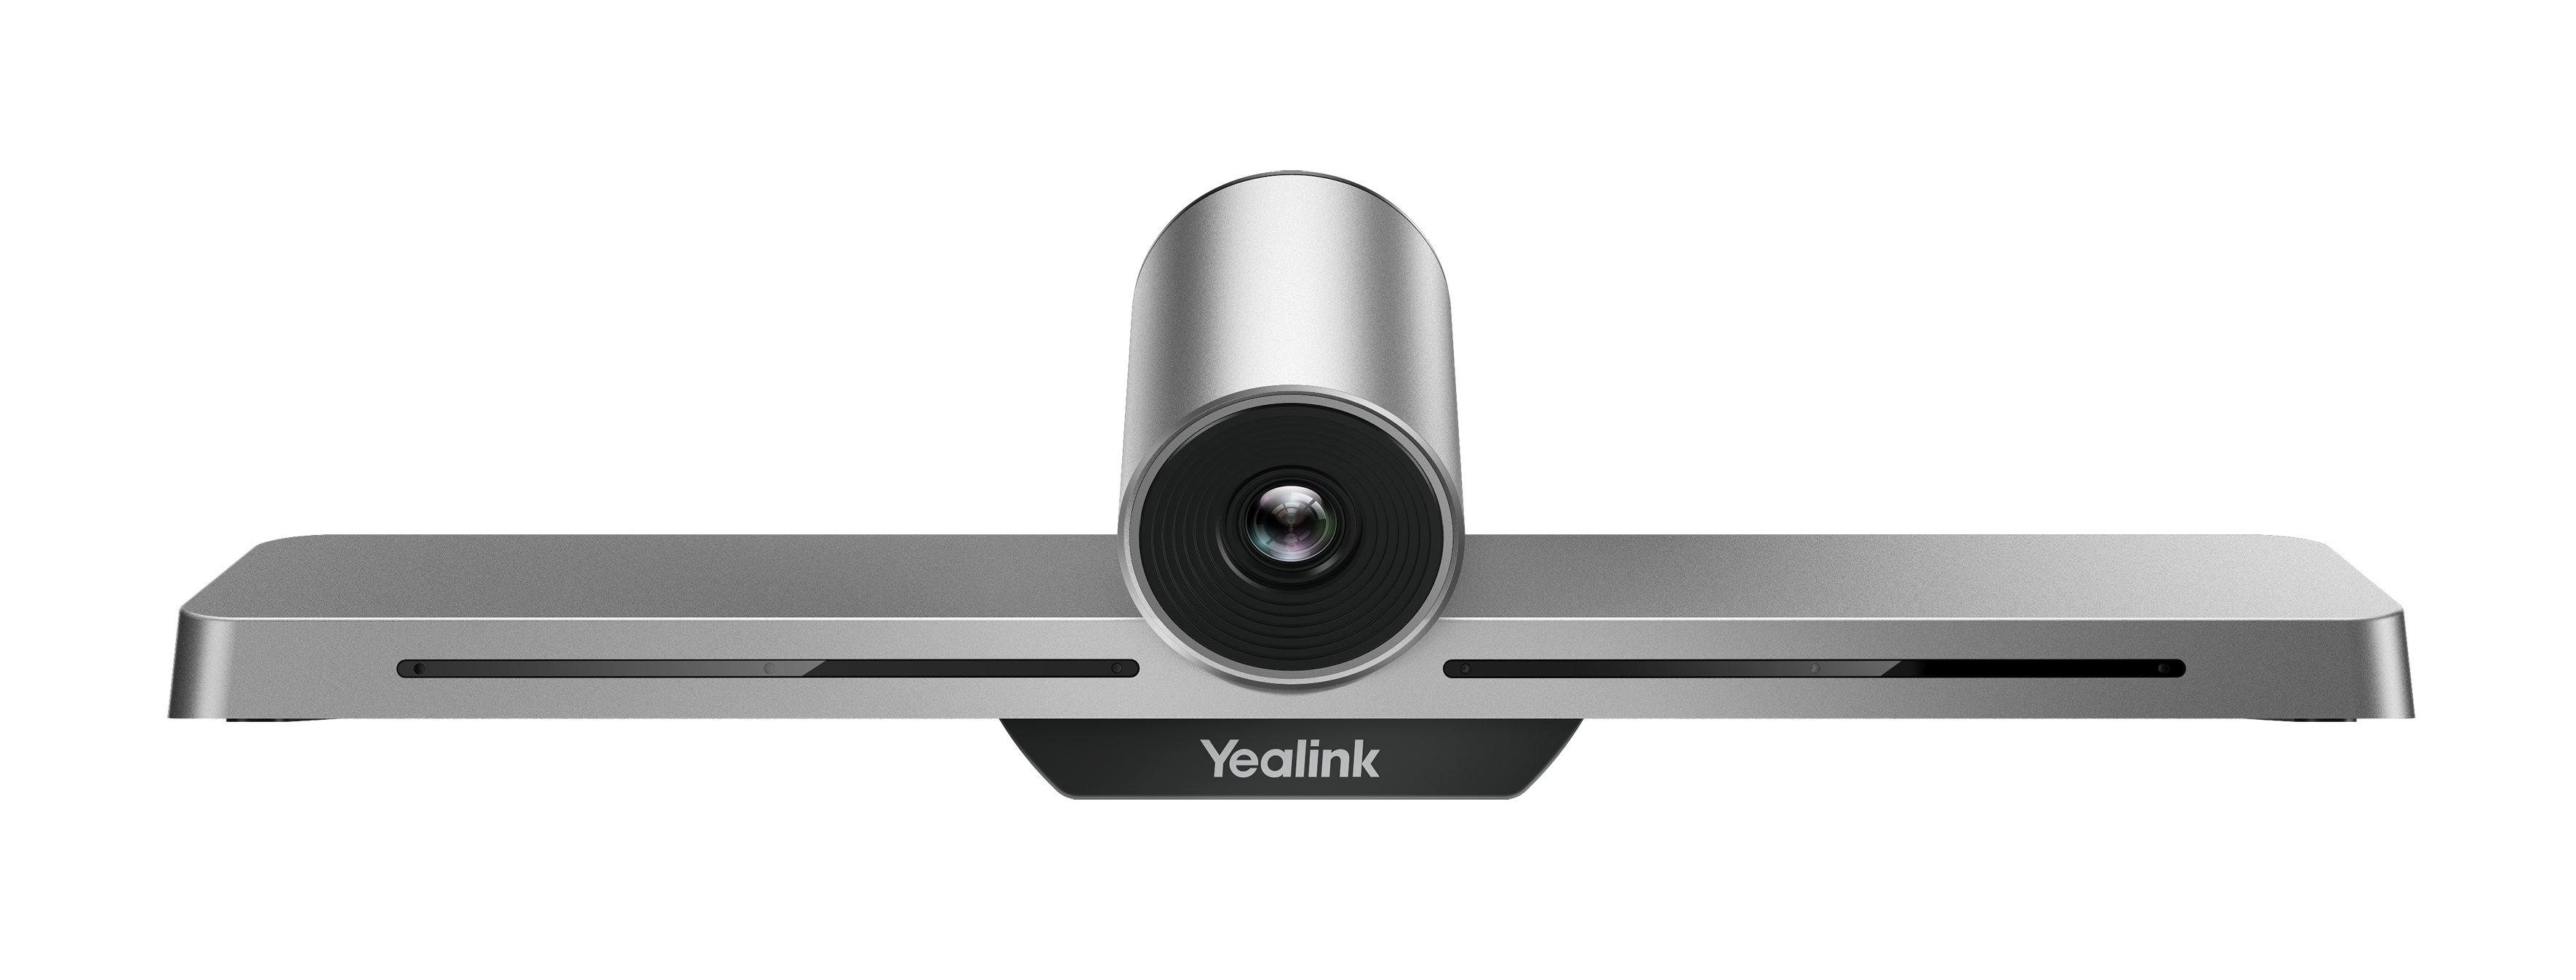 Yealink-VC200